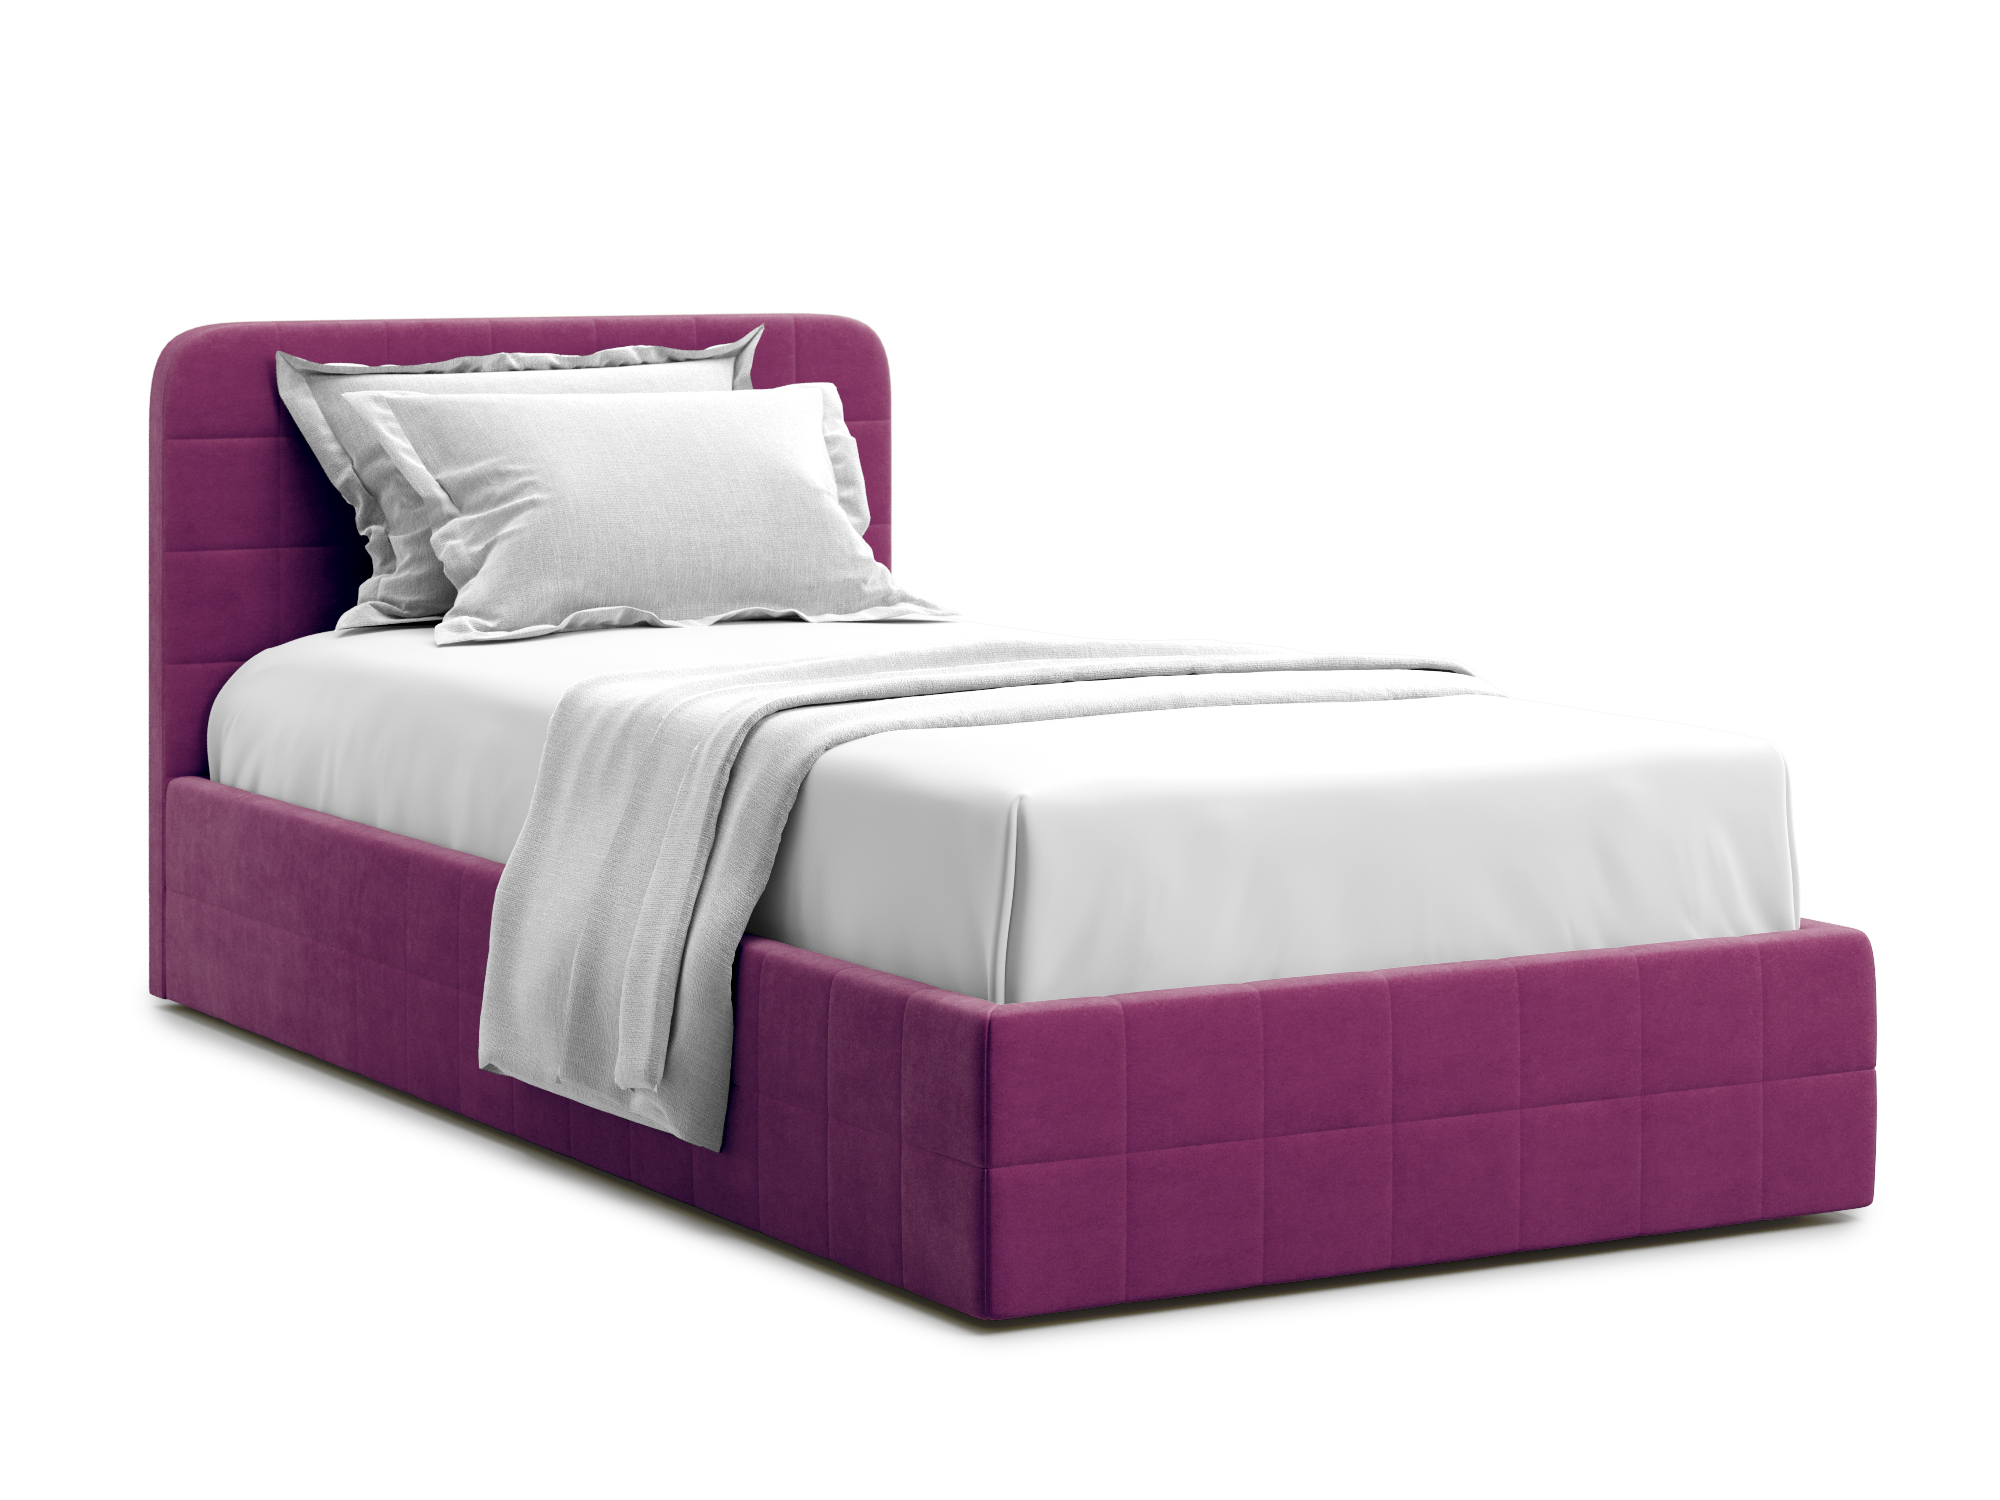 Кровать Adda 90 Velutto 15 Фиолетовый, Массив, ДСП кровать adda 90 velutto 22 коричневый массив дсп